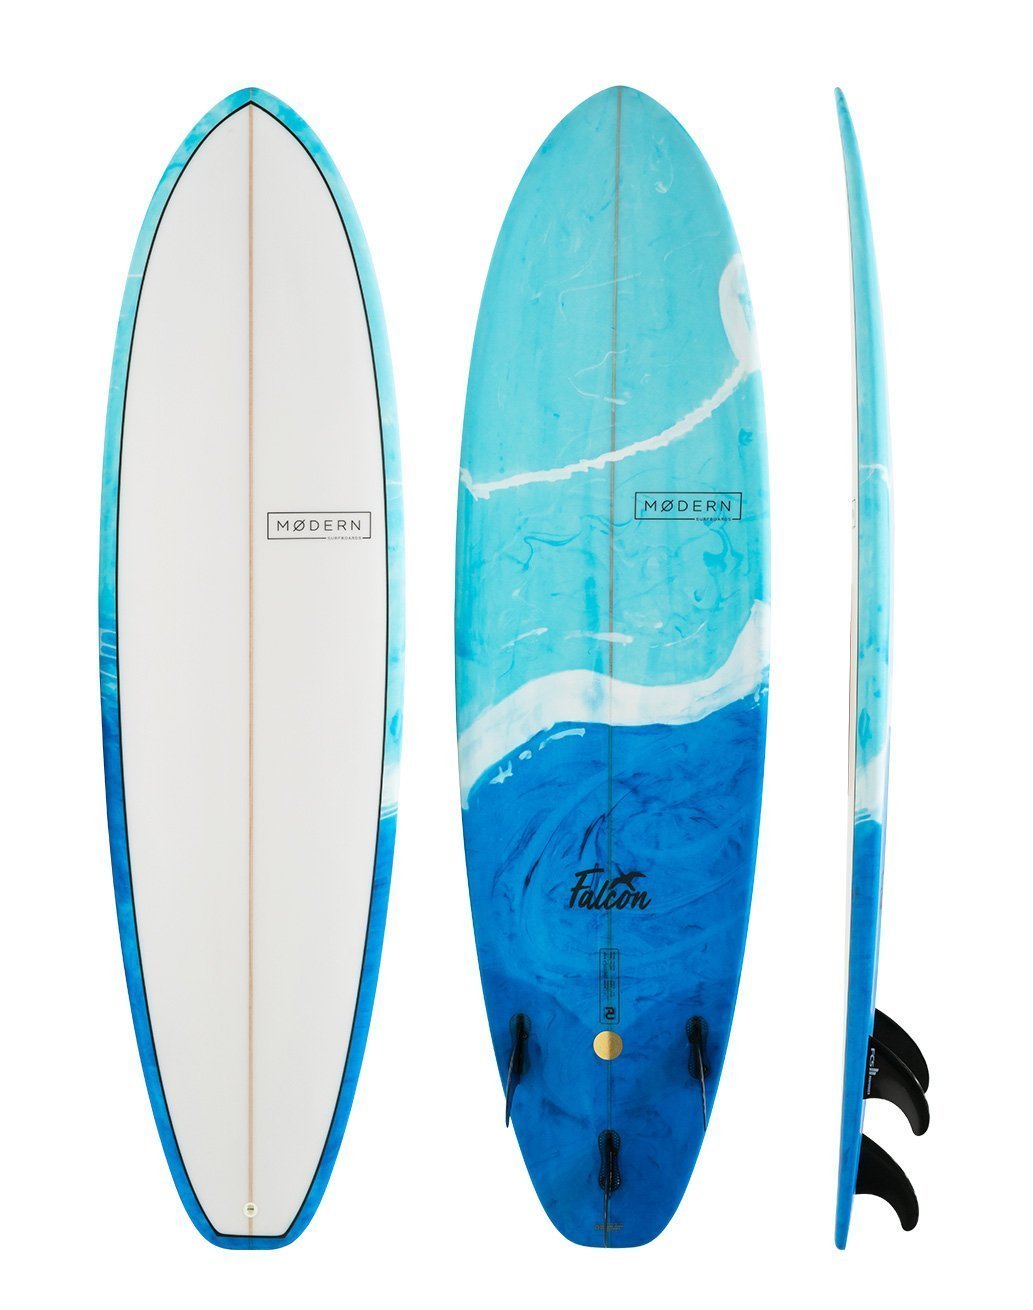 MODERN FALCON 6'8" SURFBOARD